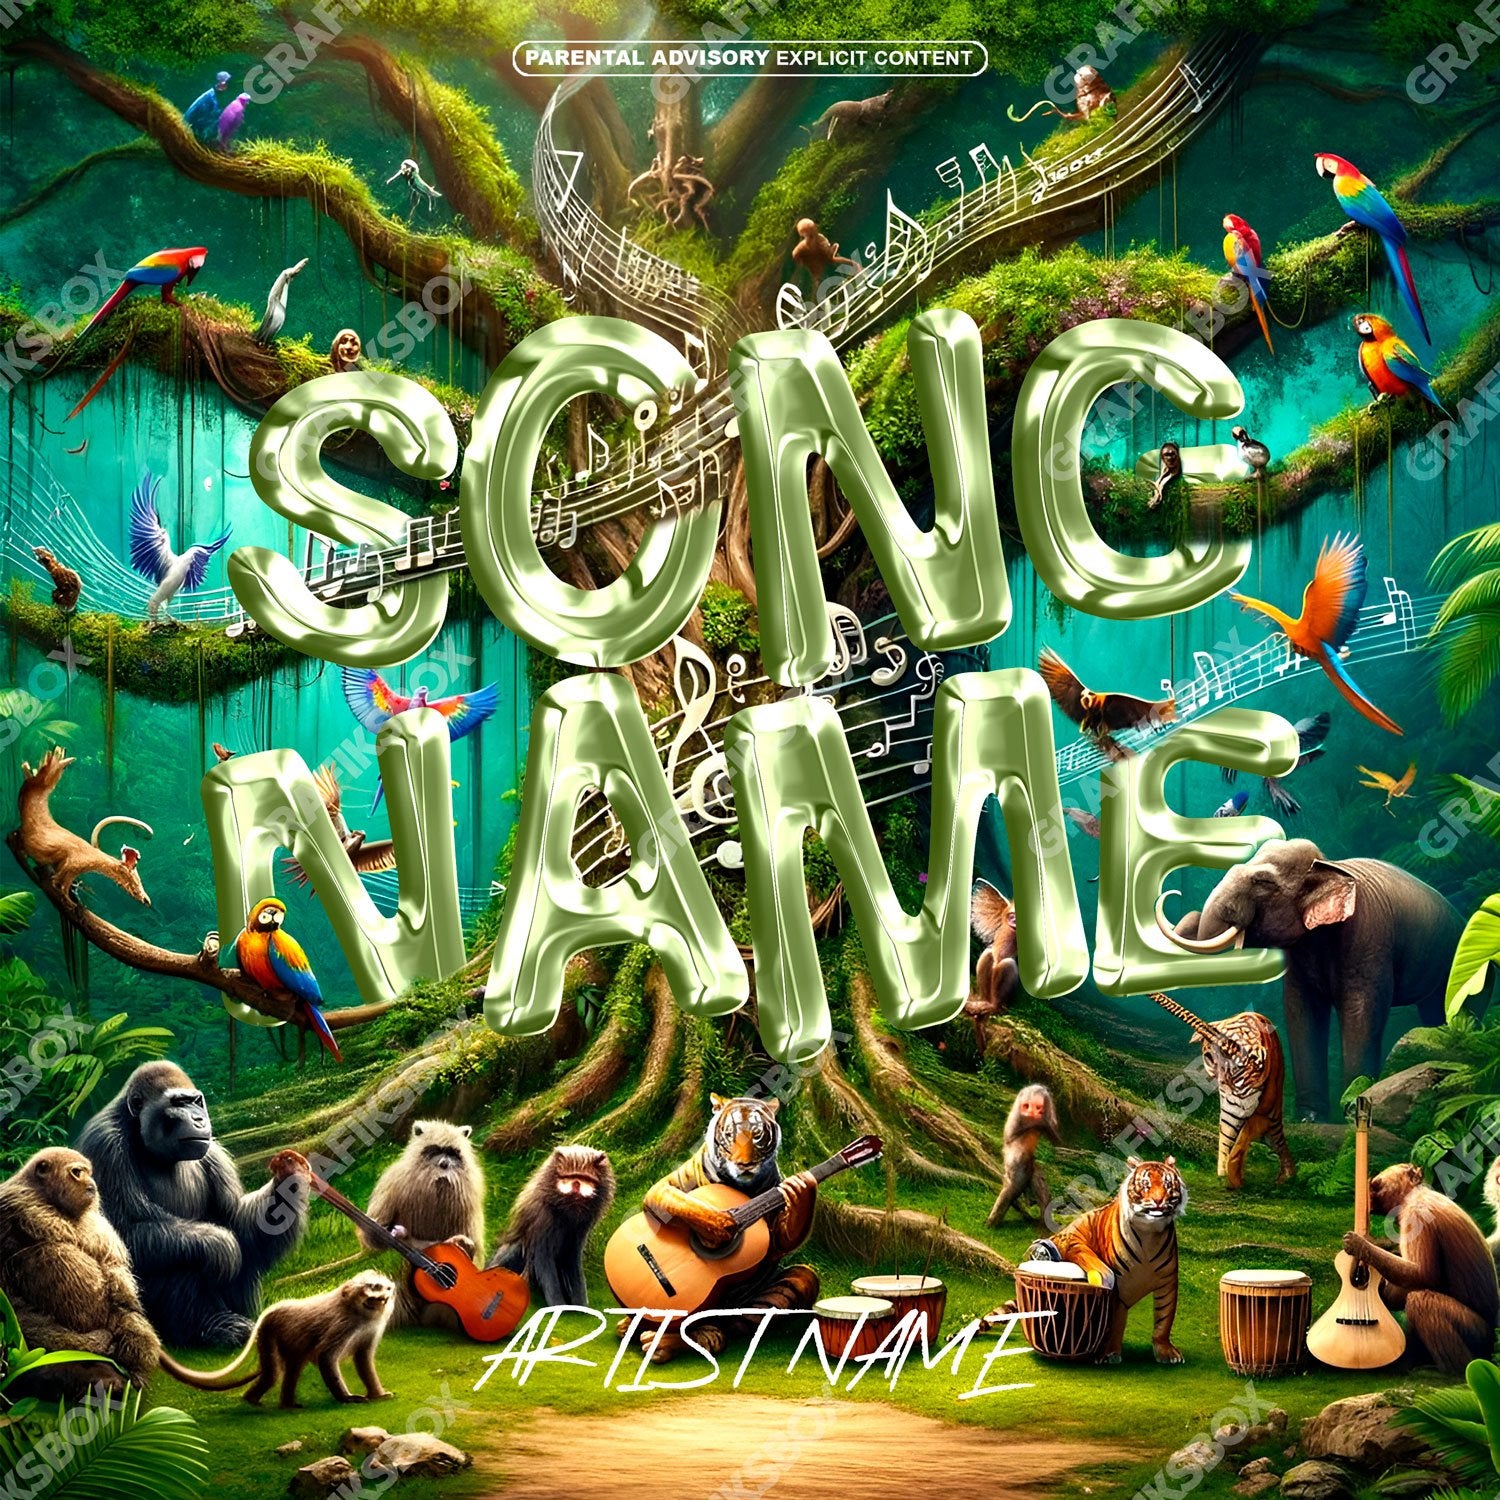 Jungle Band premade cover art